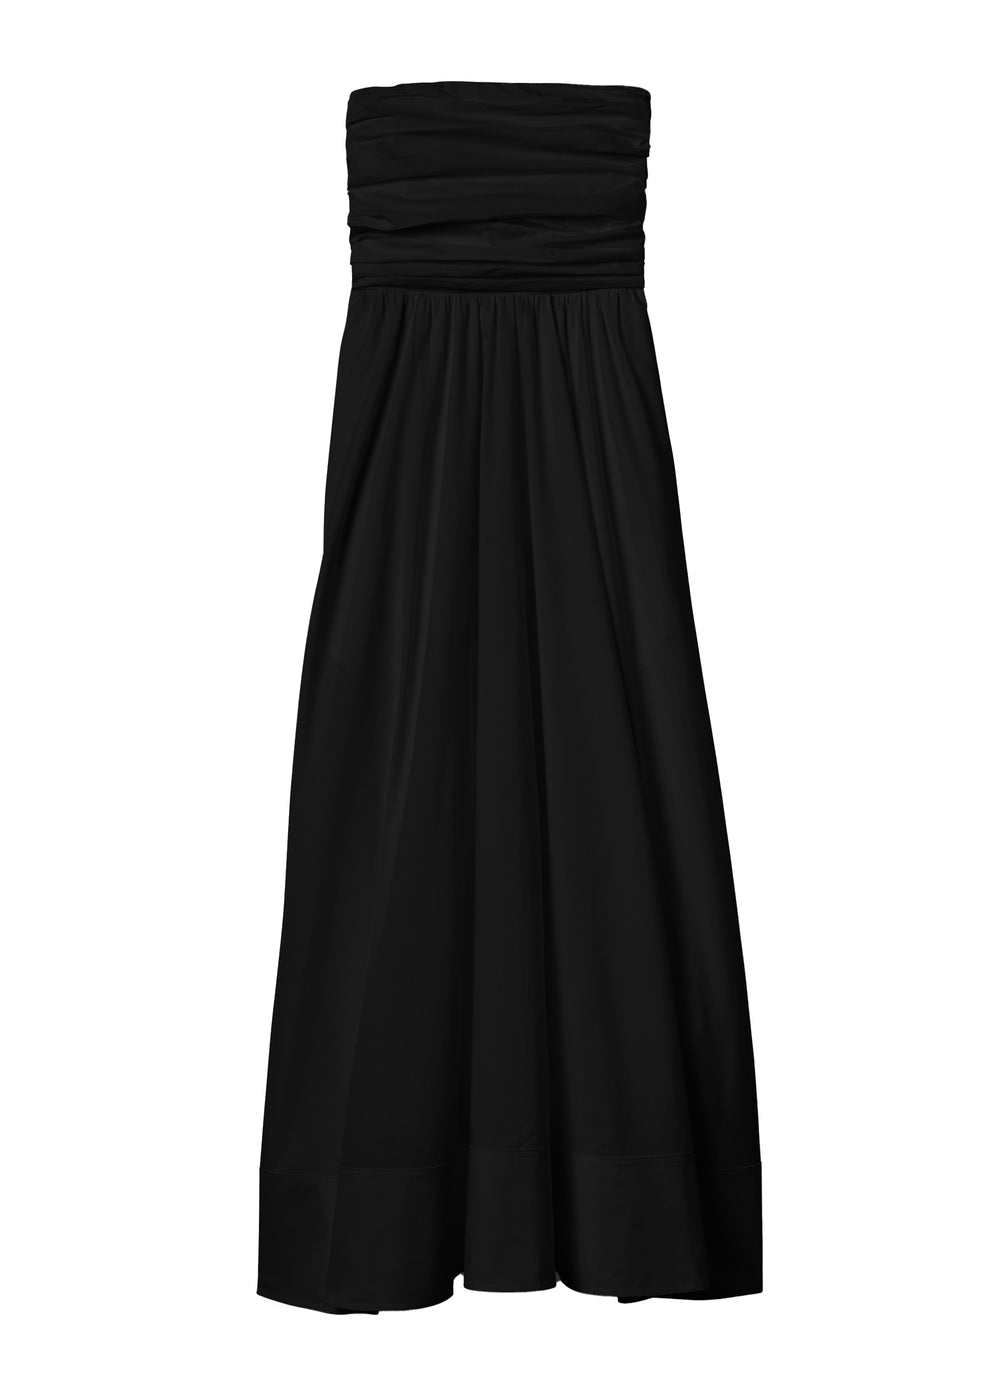 flatlay of black strapless midi dress